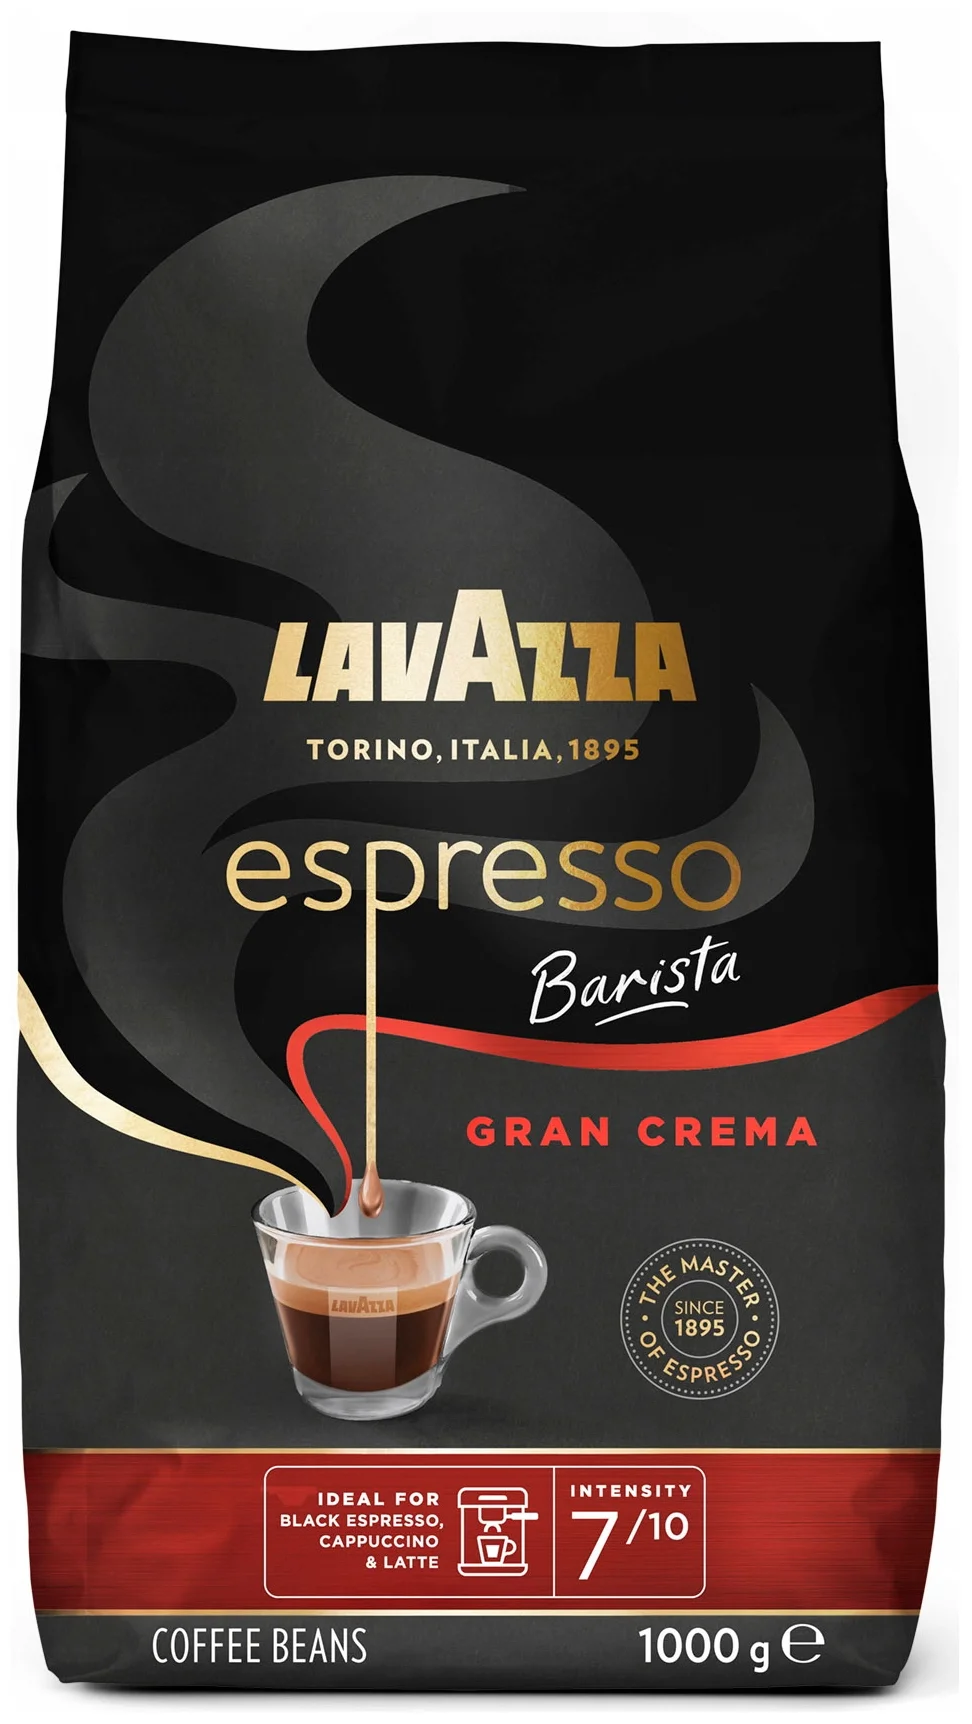 Lavazza Espresso Barista Gran Crema - вид зерен: смесь арабики и робусты